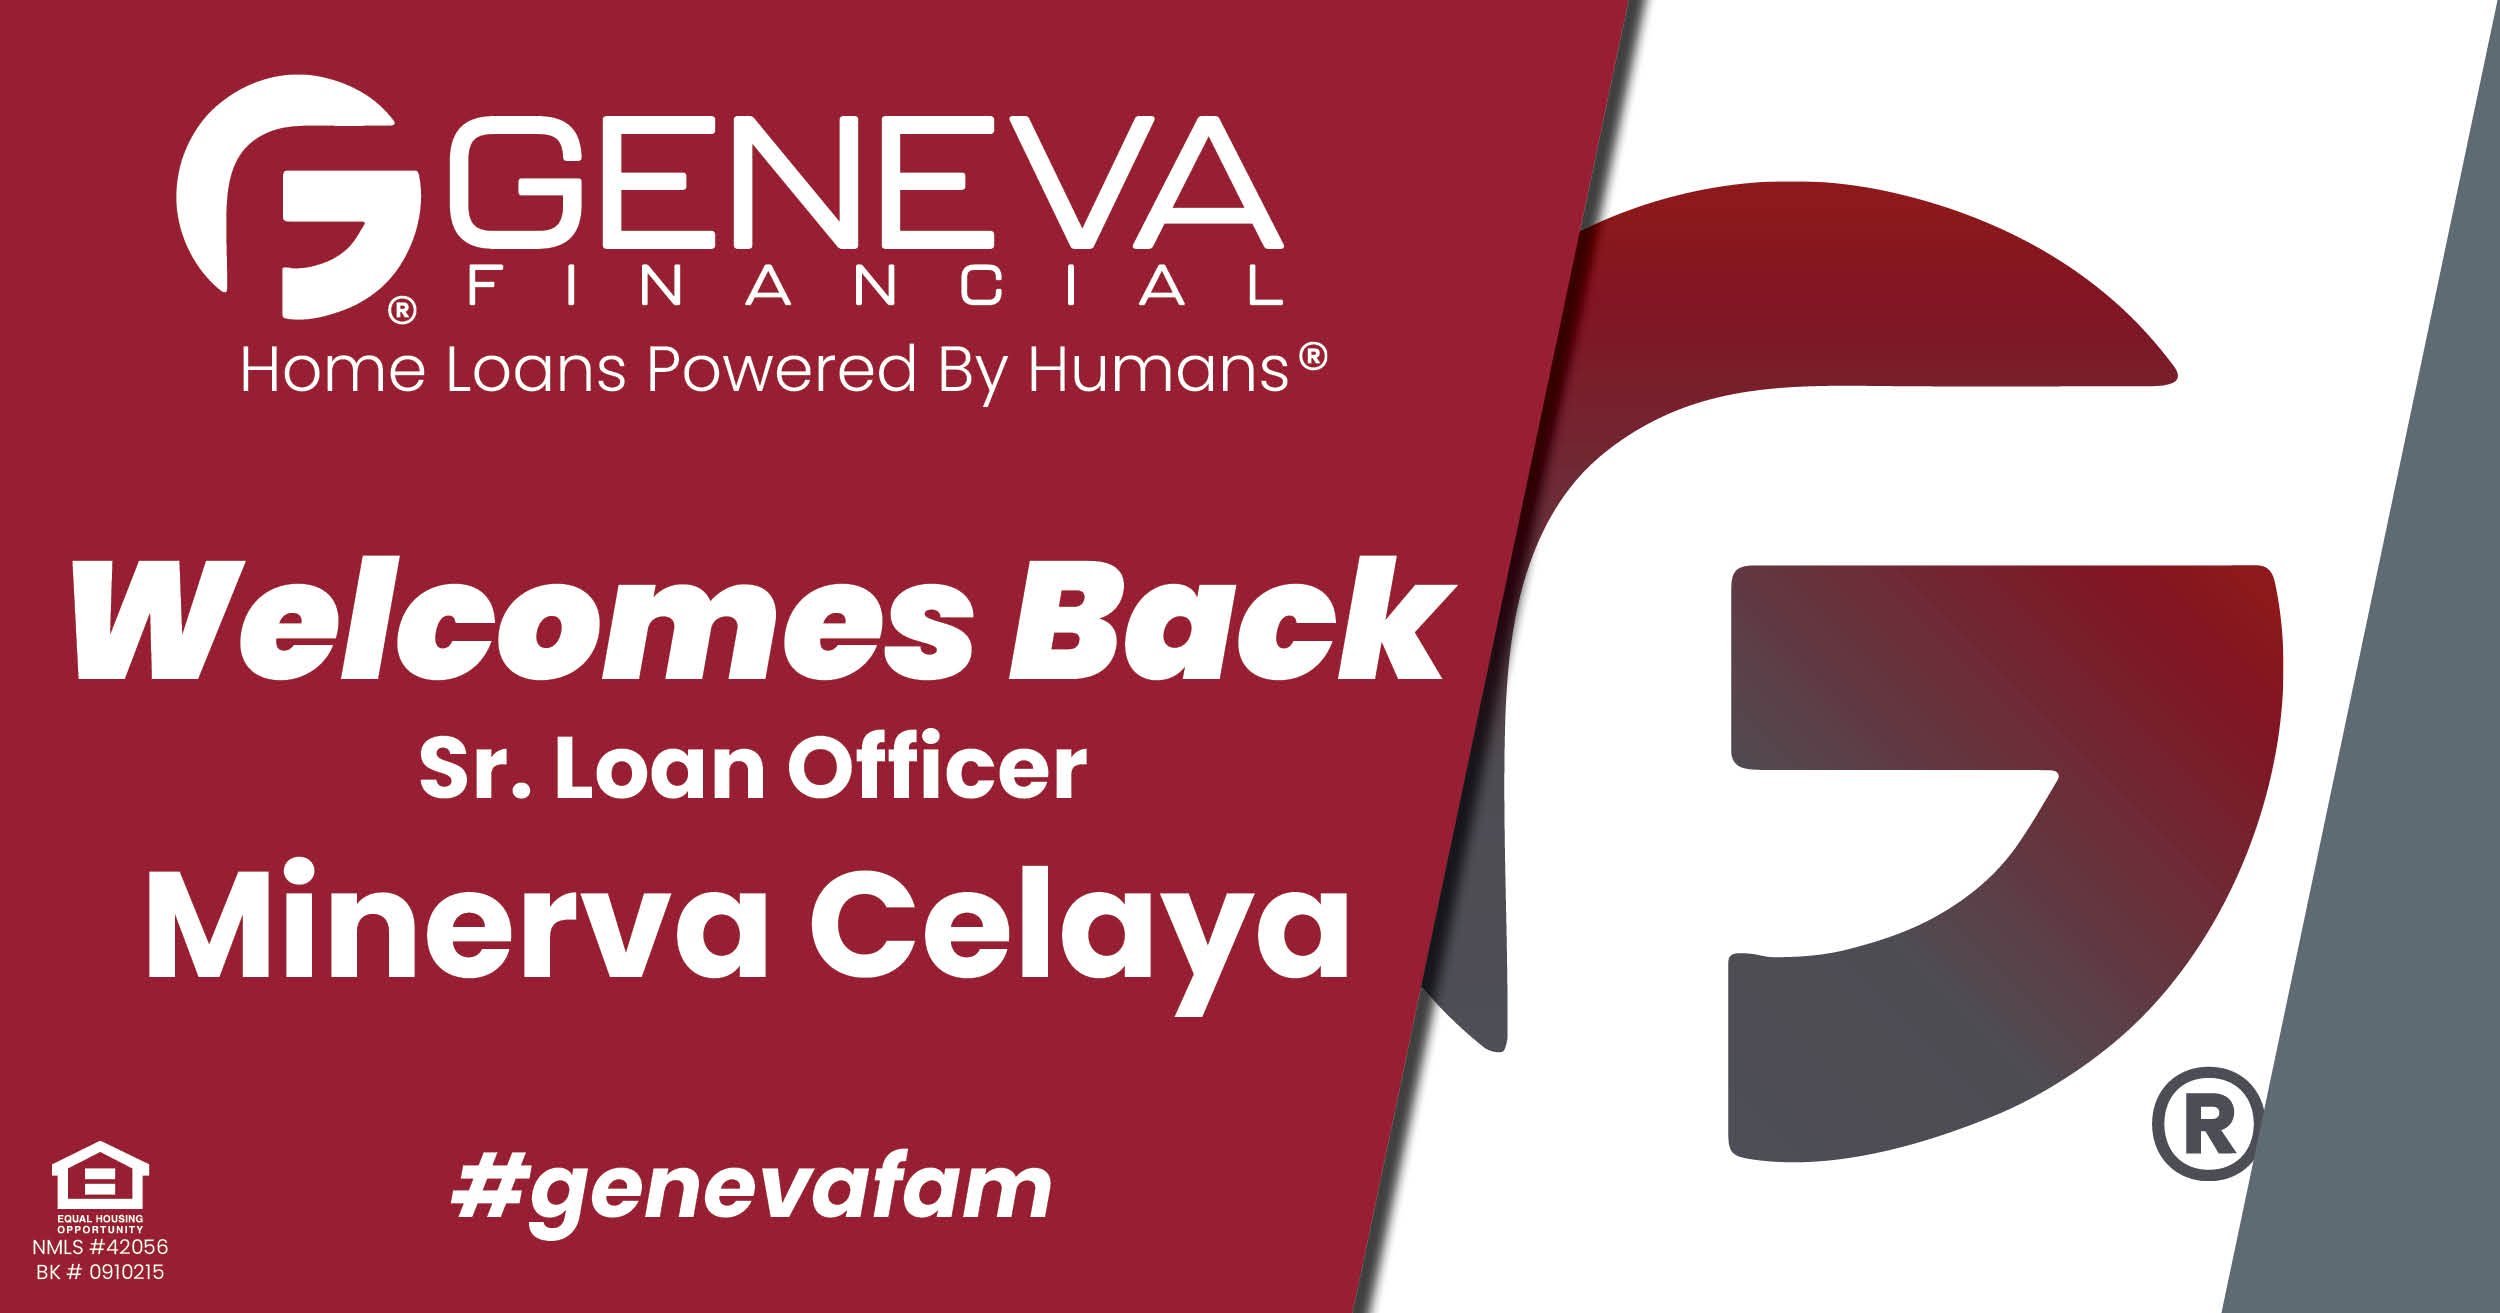 Geneva Financial Welcomes New Sr. Loan Officer Minerva Celaya to Yuma, Arizona – Home Loans Powered by Humans®.